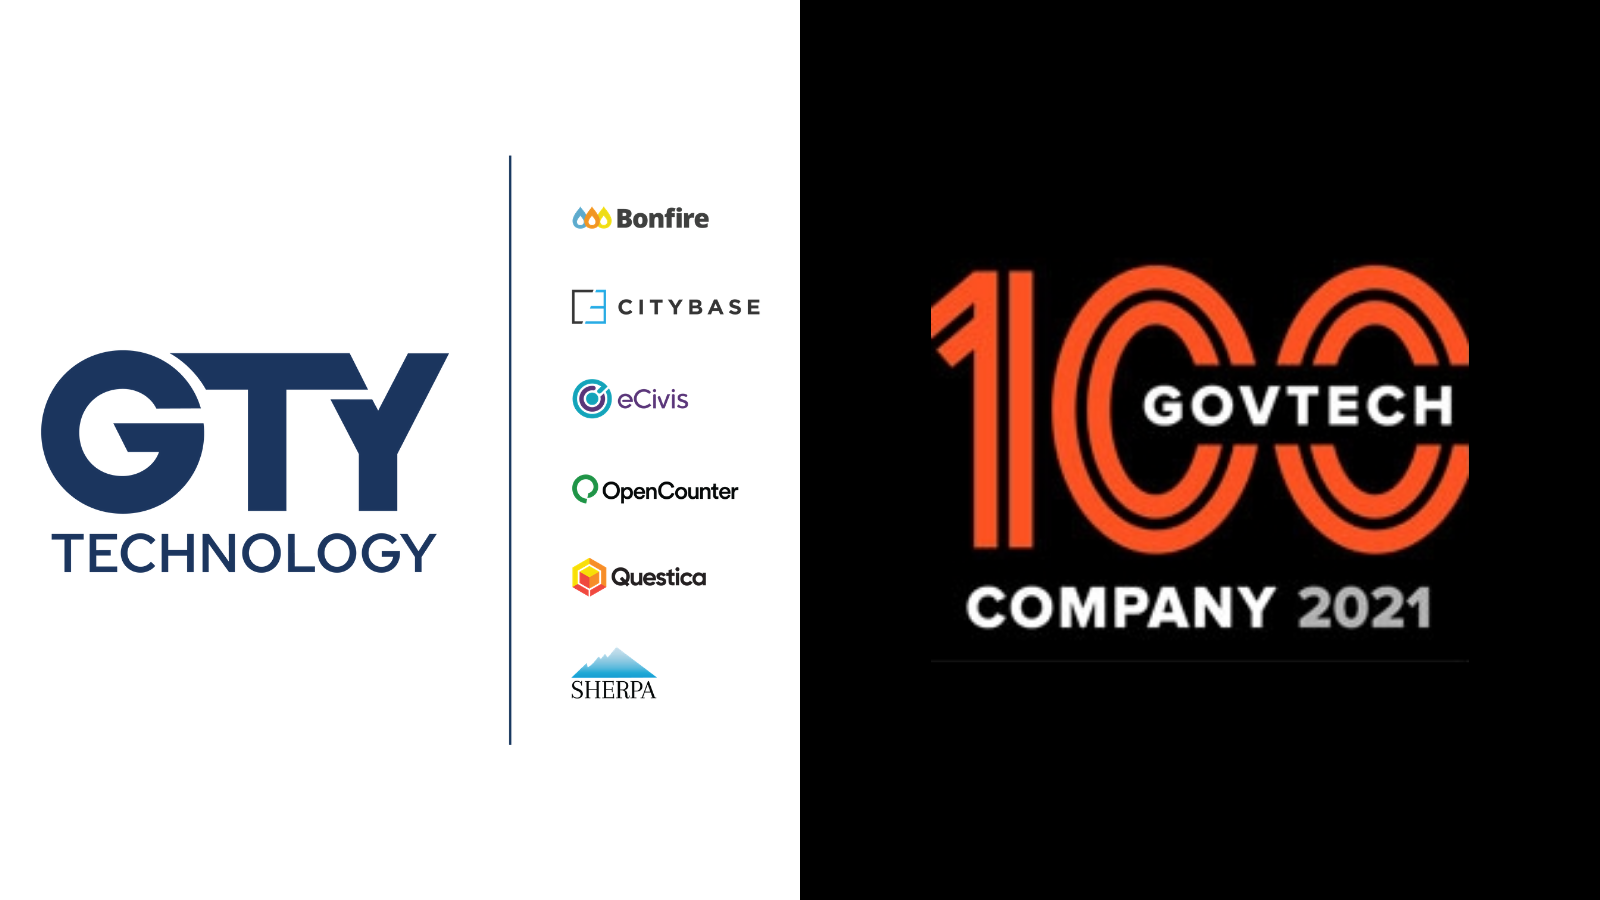 GTY Technology - Bonfire - CityBase - eCivis -OpenCounter - Questica - Sherpa - GovTech 100 Company 2021